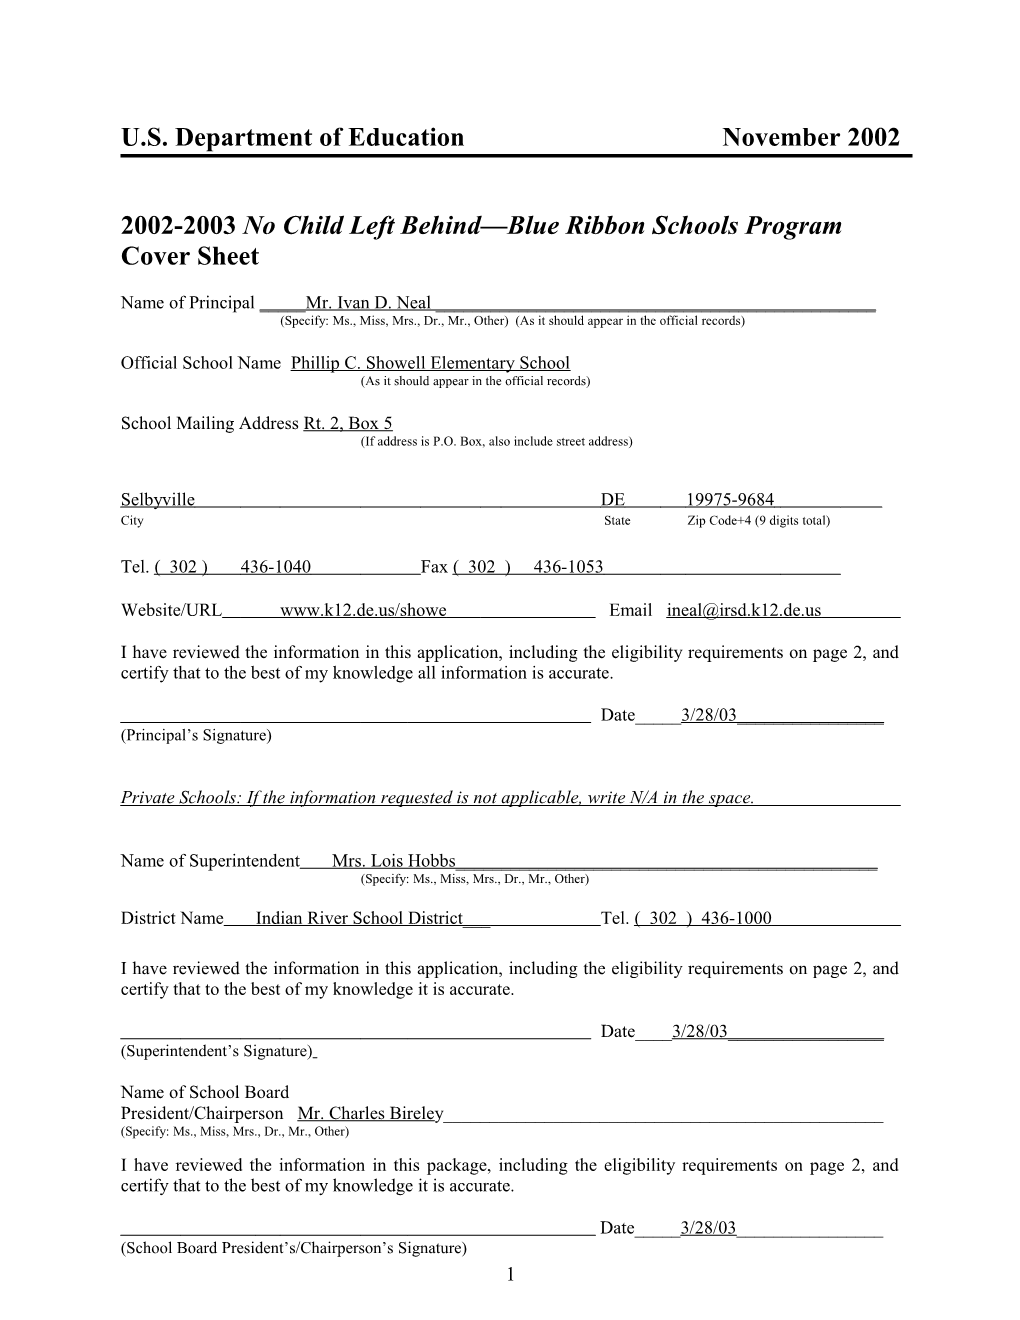 Phillip C. Showell Elementary School 2003 No Child Left Behind-Blue Ribbon School (Msword)